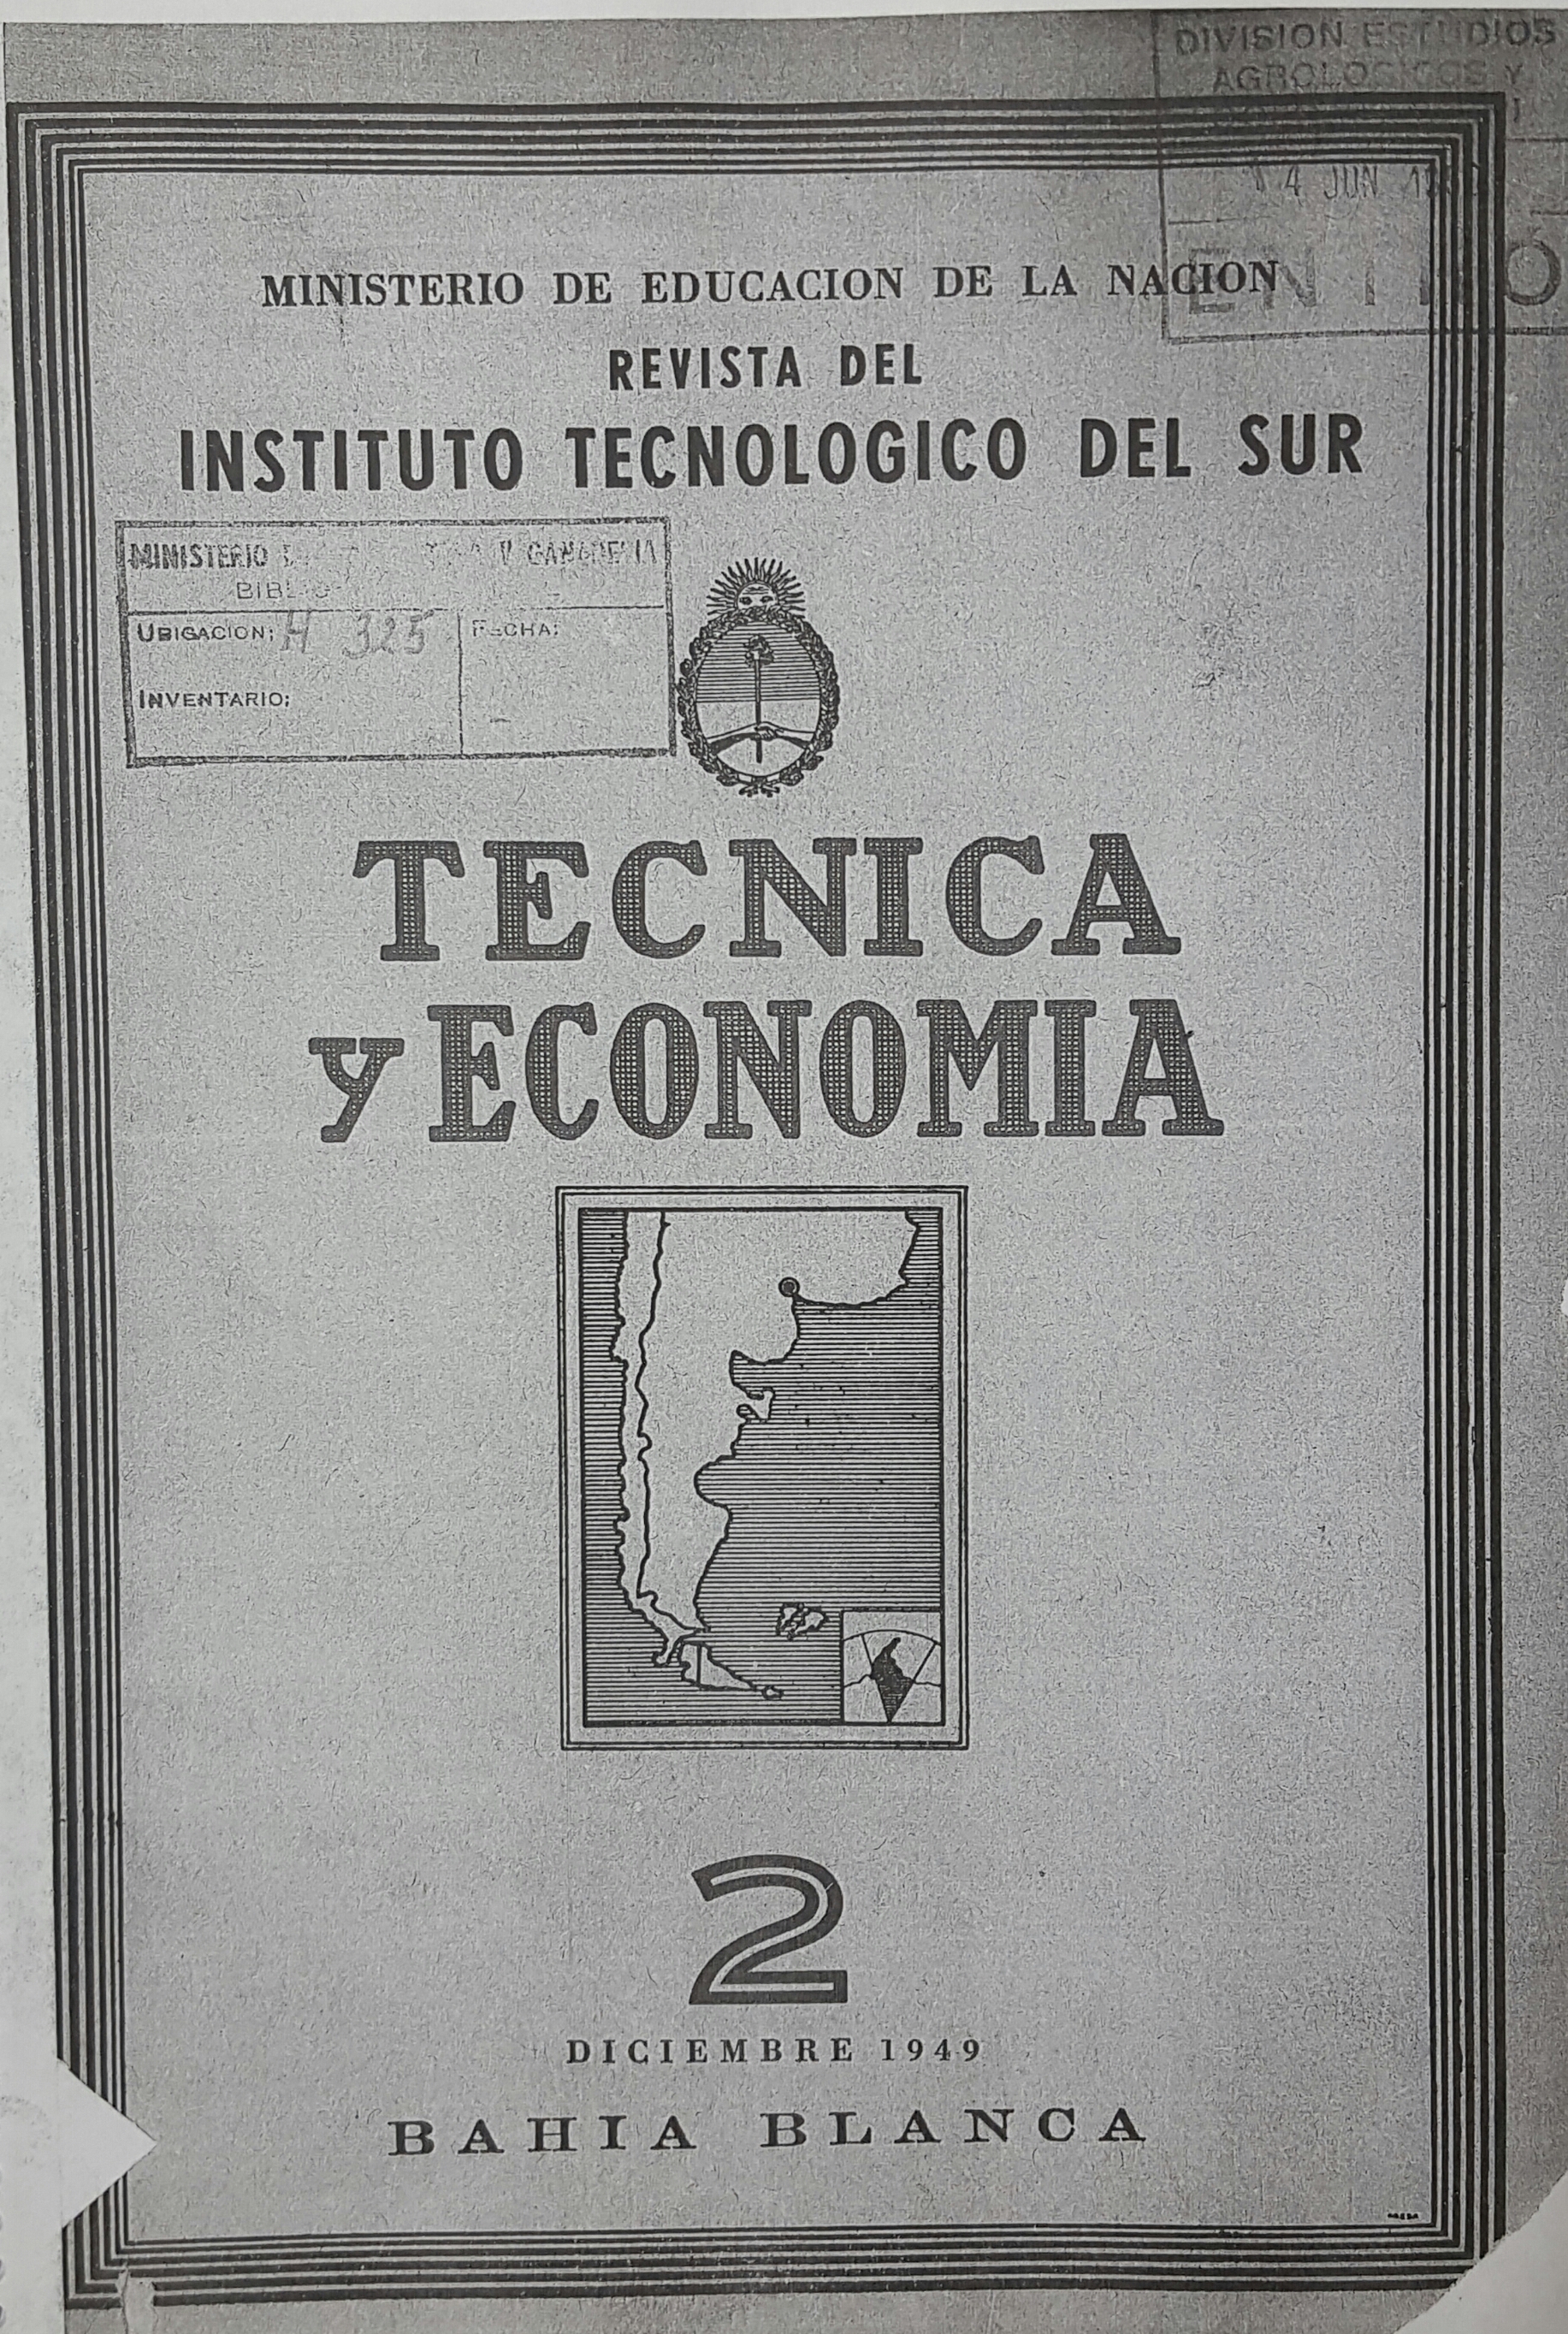 					Visualizar v. 1 n. 2 (1949): Técnica y Economía
				